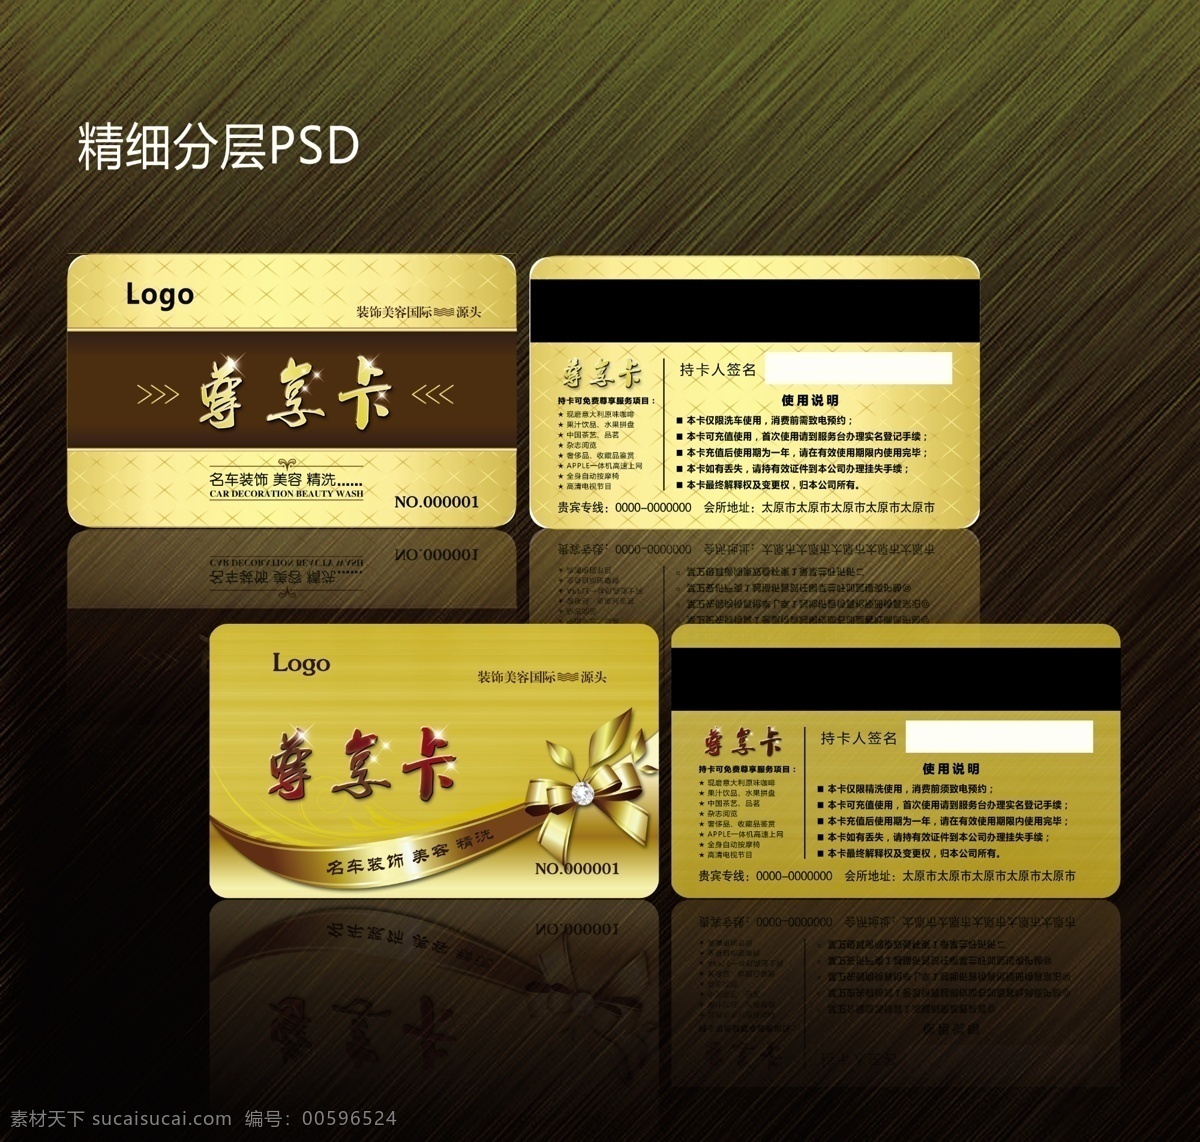 vip尊享卡 vip 尊享卡 金色 蝴蝶结 卡片设计 名片卡片 广告设计模板 源文件